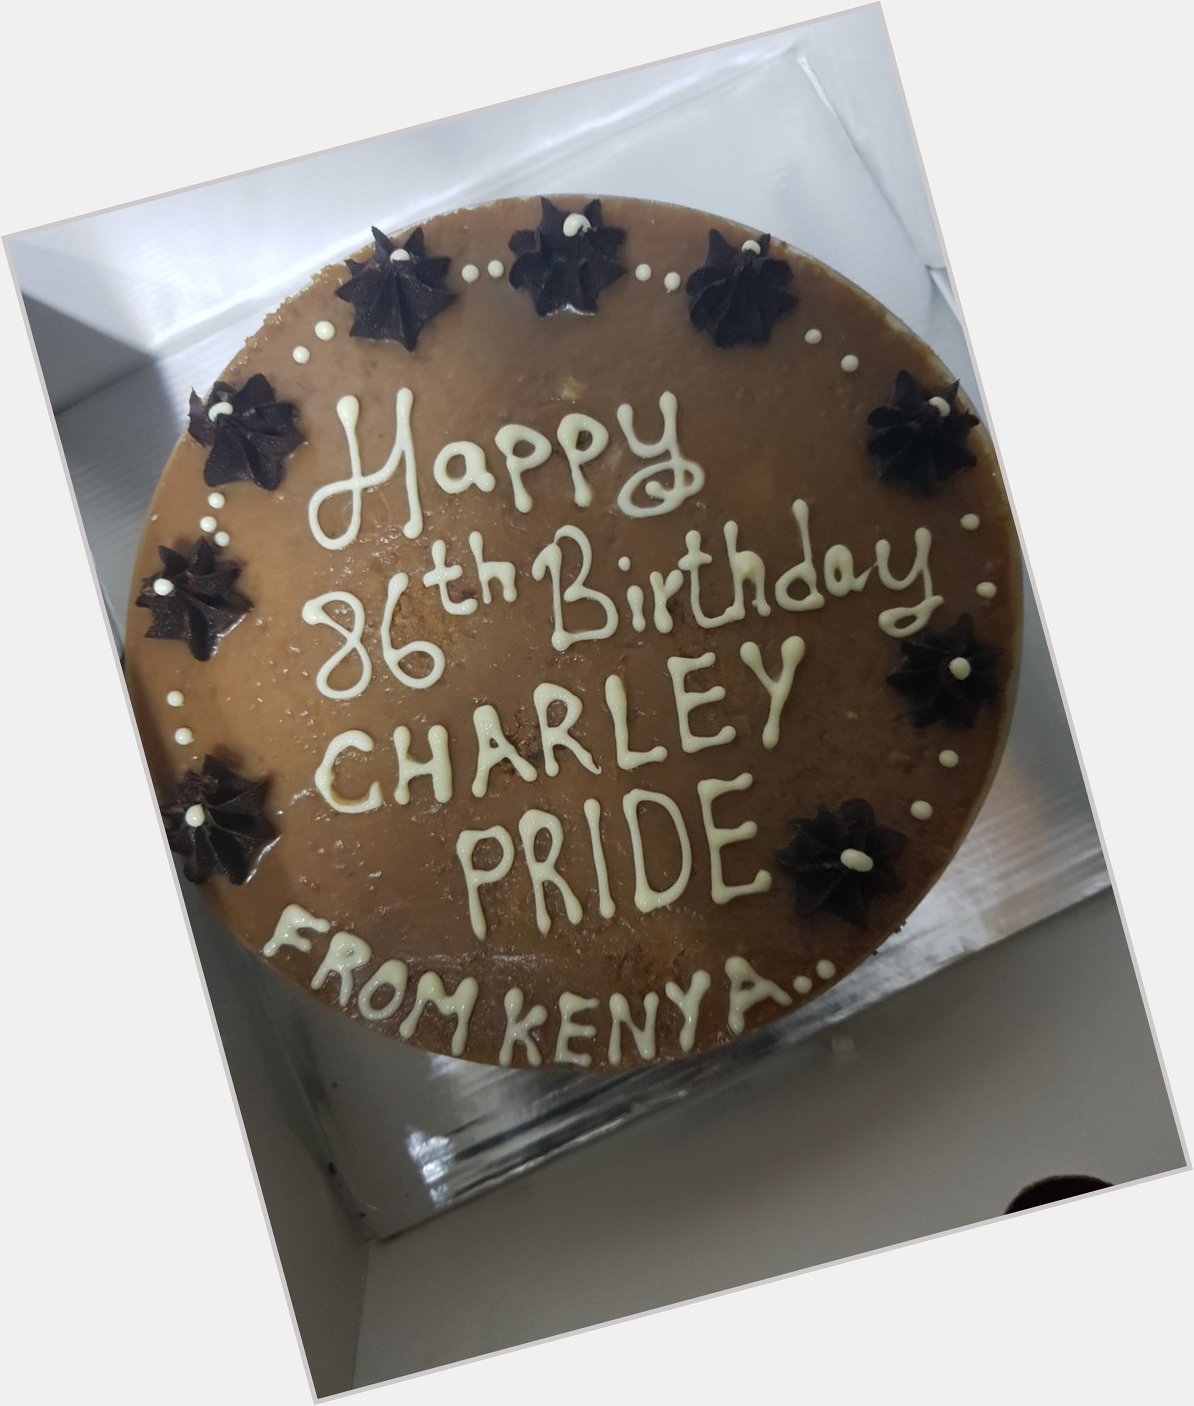 Happy Birthday Charley Pride. With love from Kenya.   